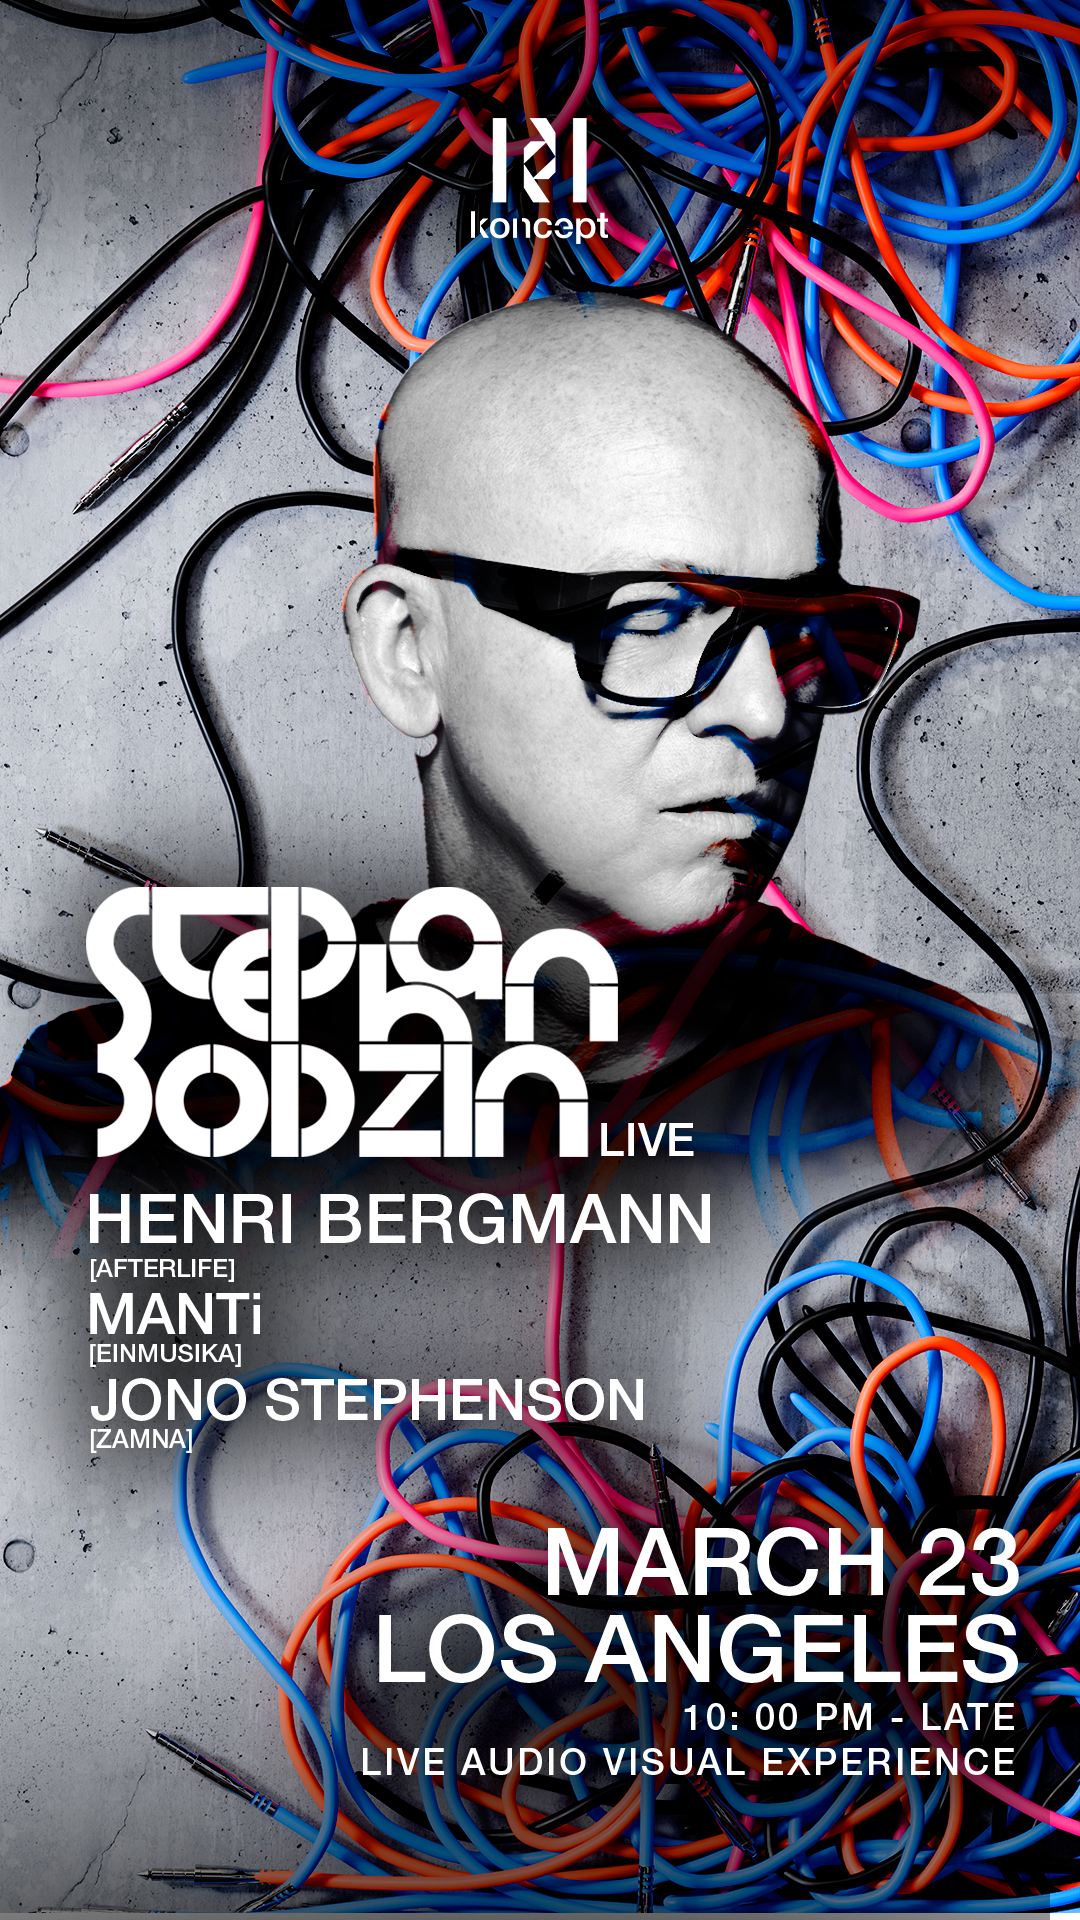 Koncept presents: Stephan Bodzin (Live) + Henri Bergmann (Afterlife) Live AV Experience - Página frontal